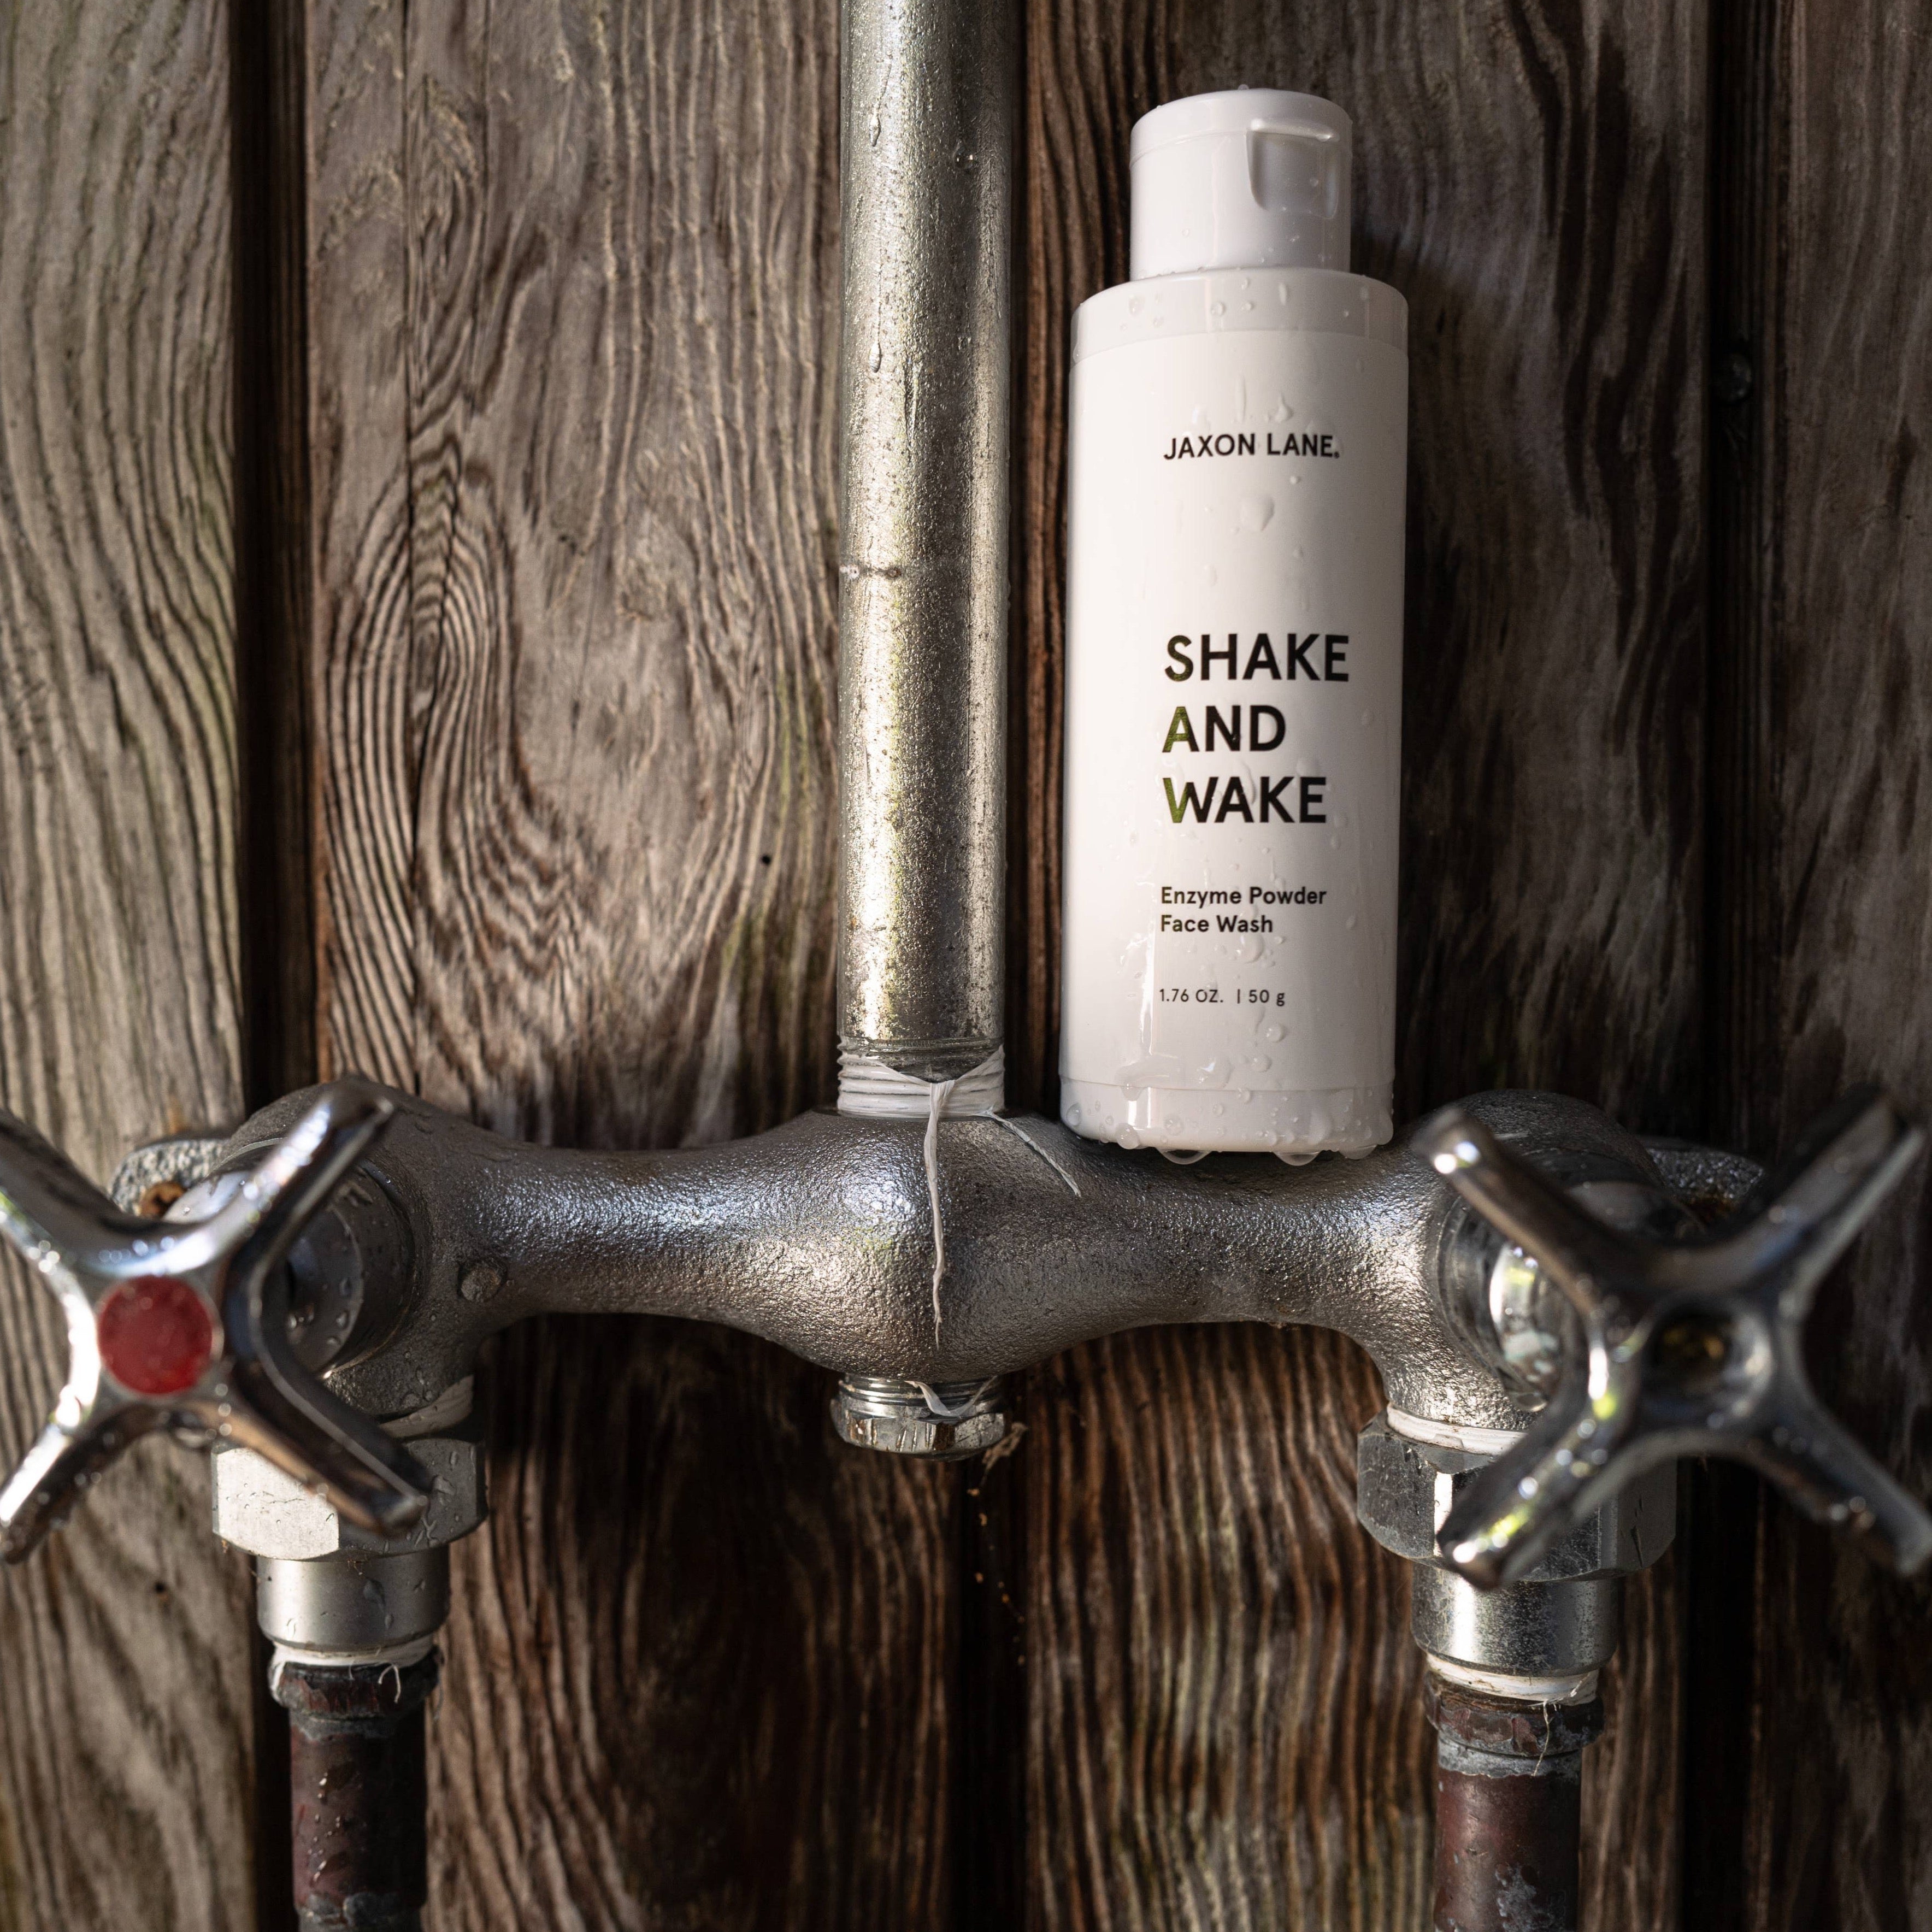 SHAKE AND WAKE - Enzyme Powder Face Wash by JAXON LANE